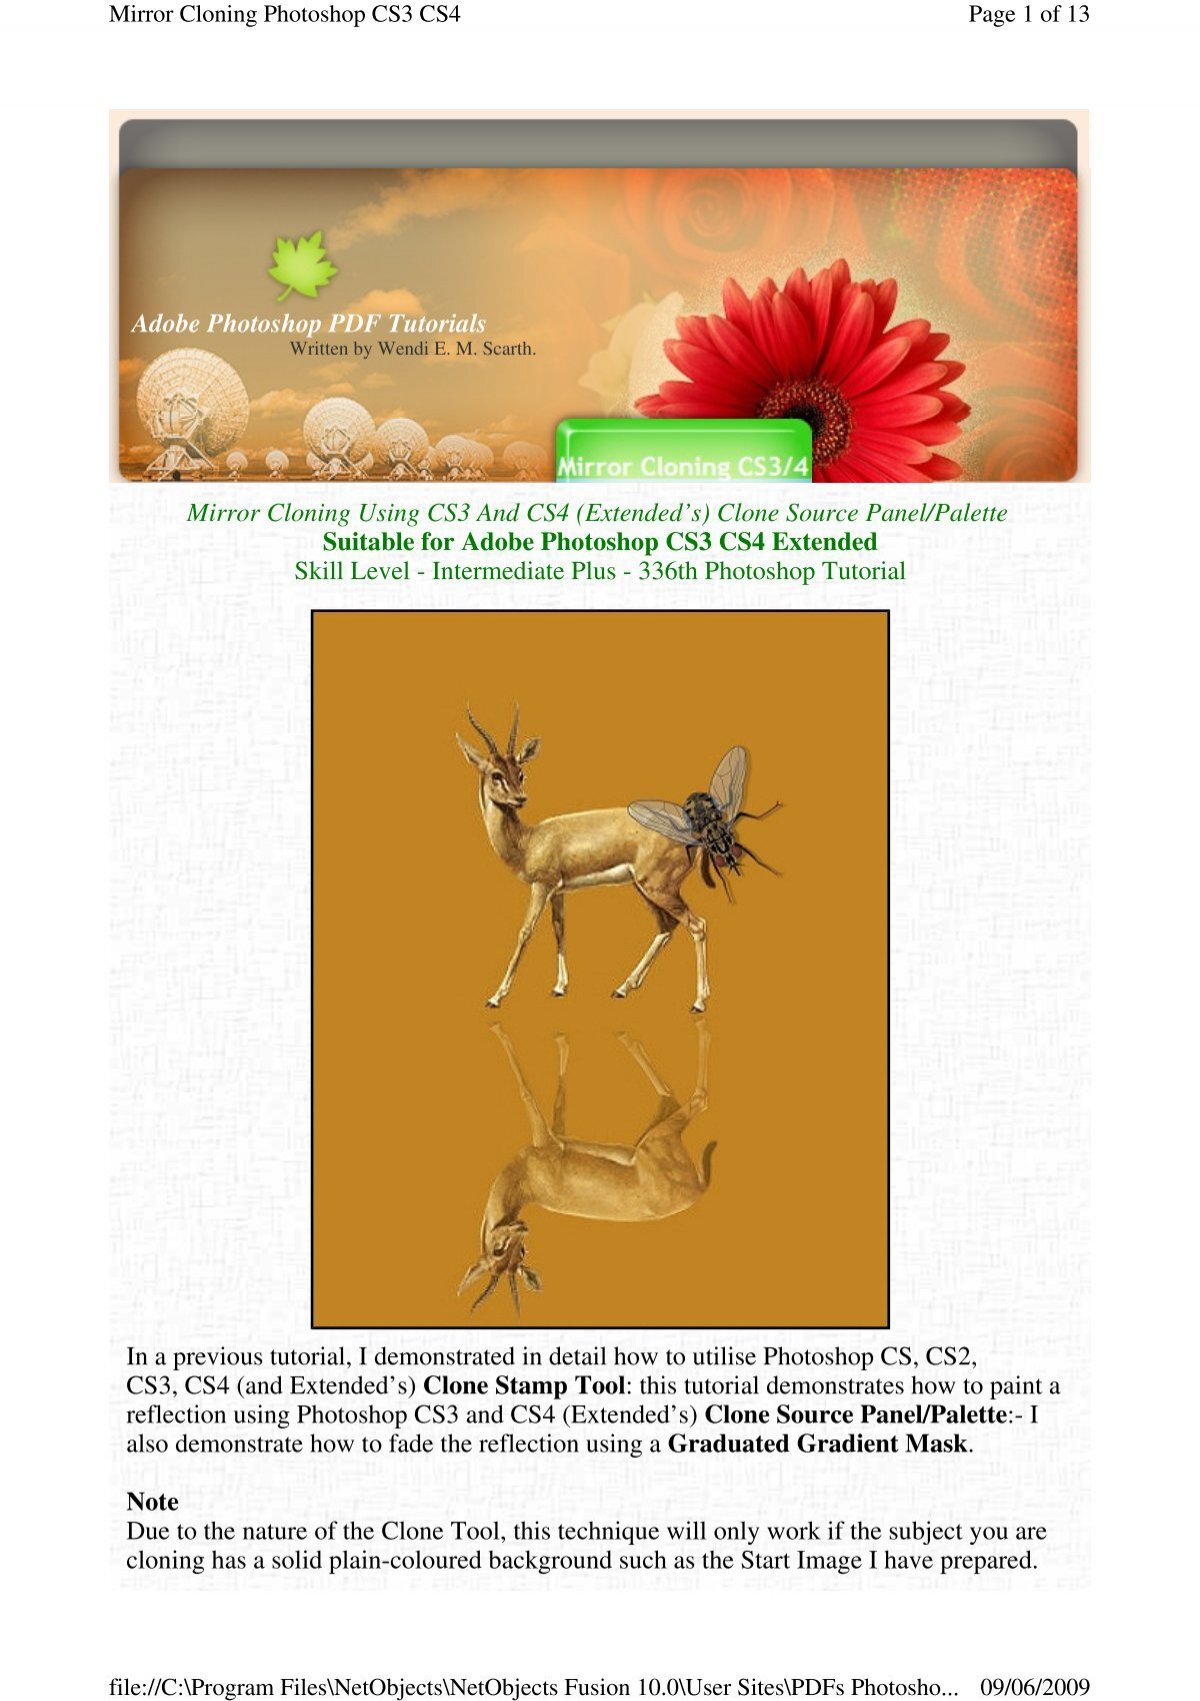 Adobe photoshop cs6 bible pdf free download download crack only adobe illustrator cs6